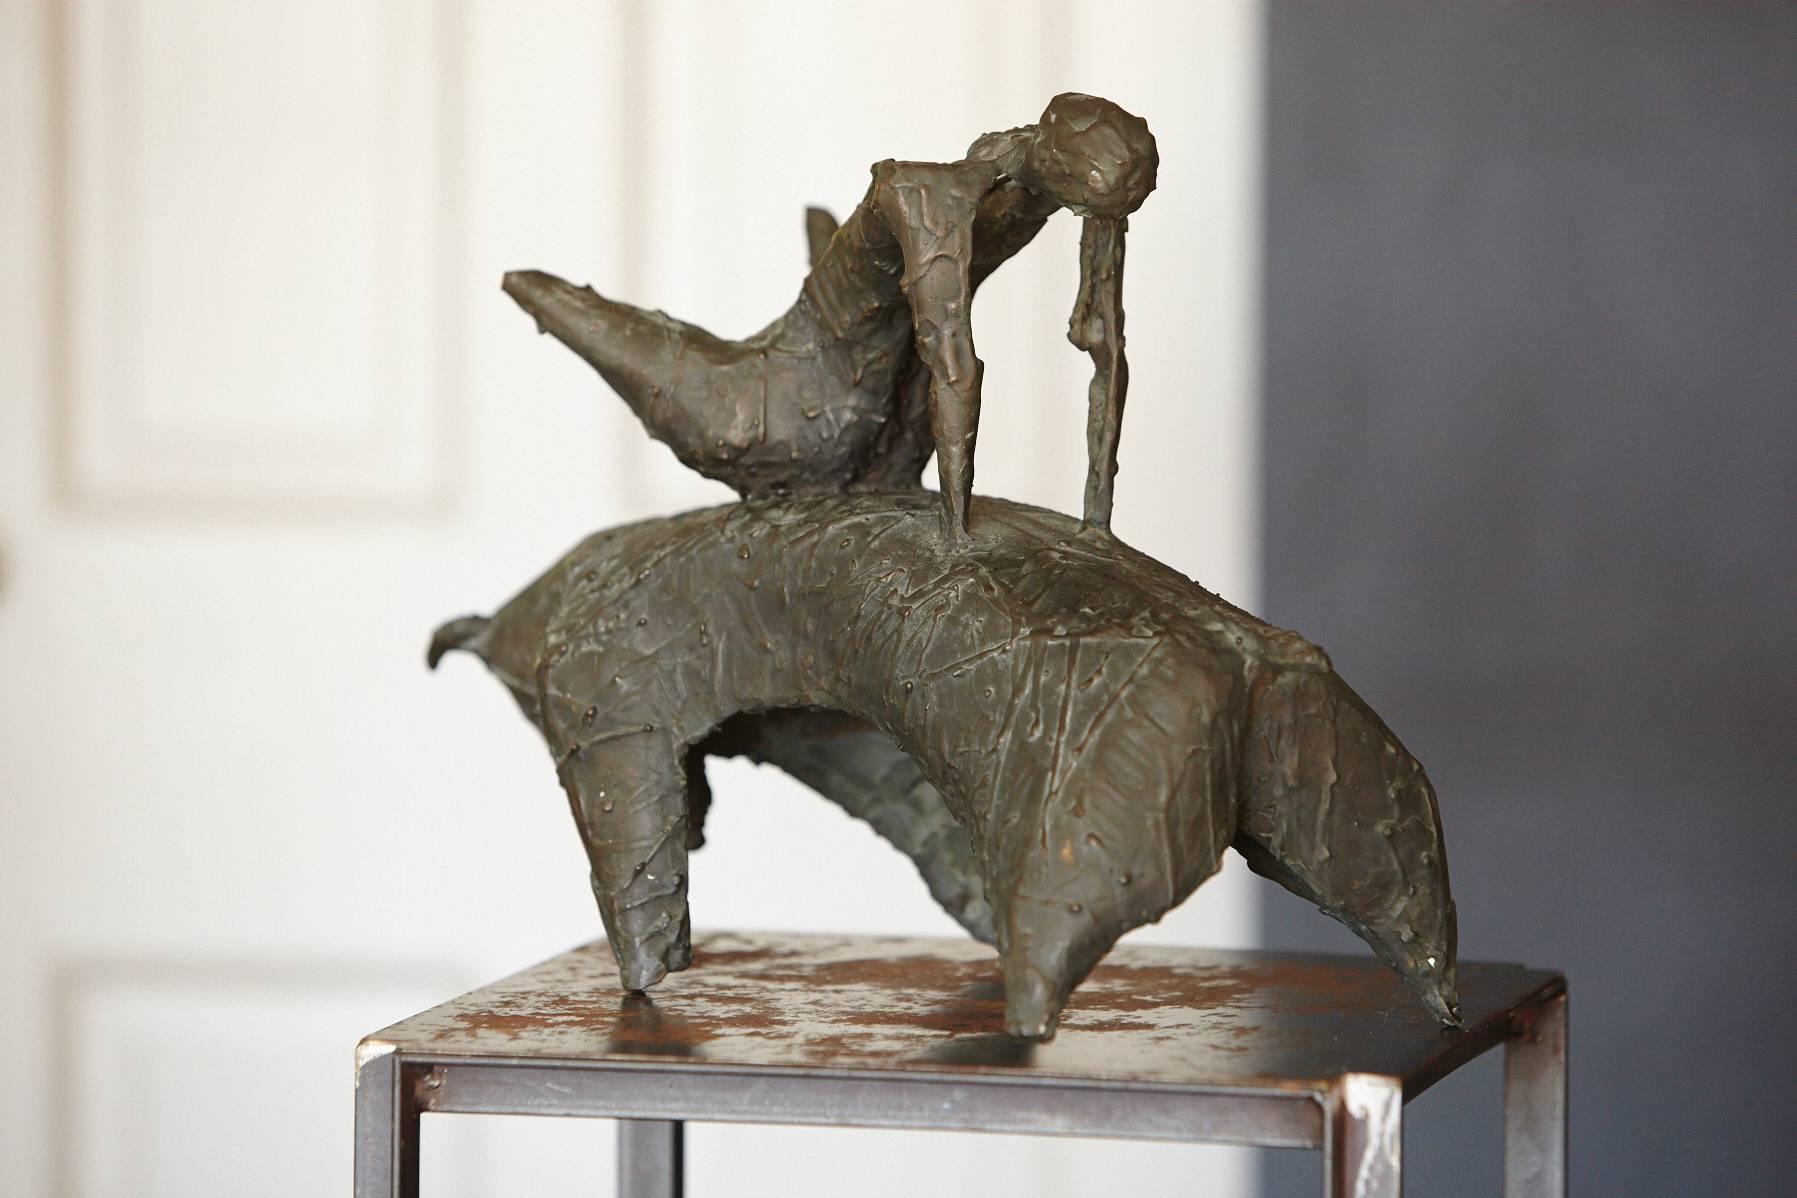 American Figurative Brutalist Sculpture of a Woman Riding a Bull